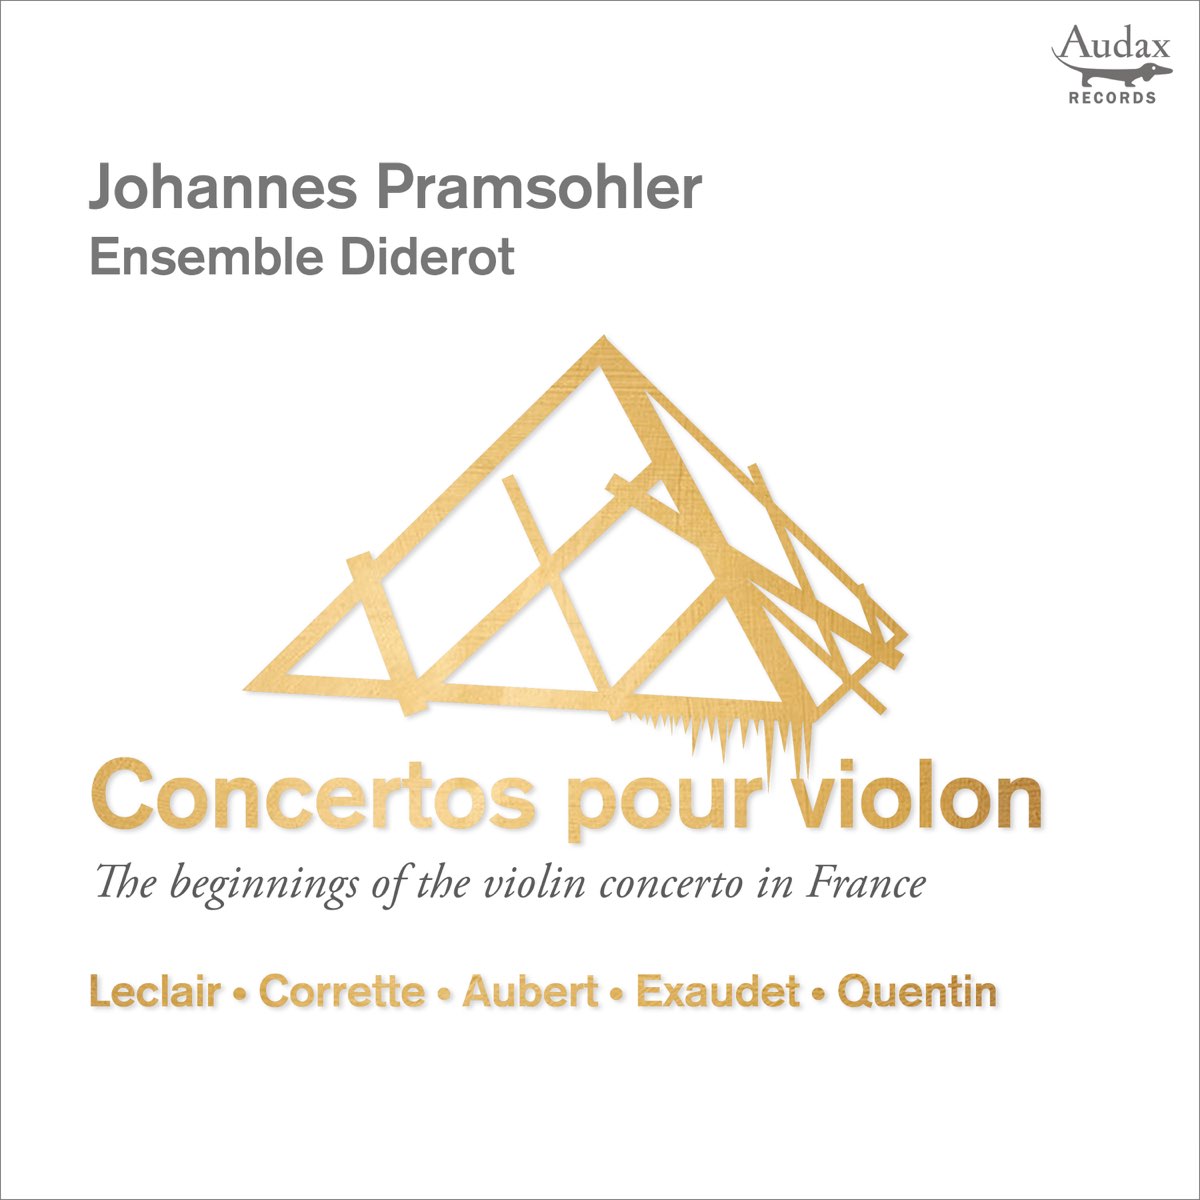 Johannes Pramsohler & Ensemble Diderot - Concertos pour violon: The Beginnings of the Violin Concerto in France (2021) [FLAC 24bit/96kHz]